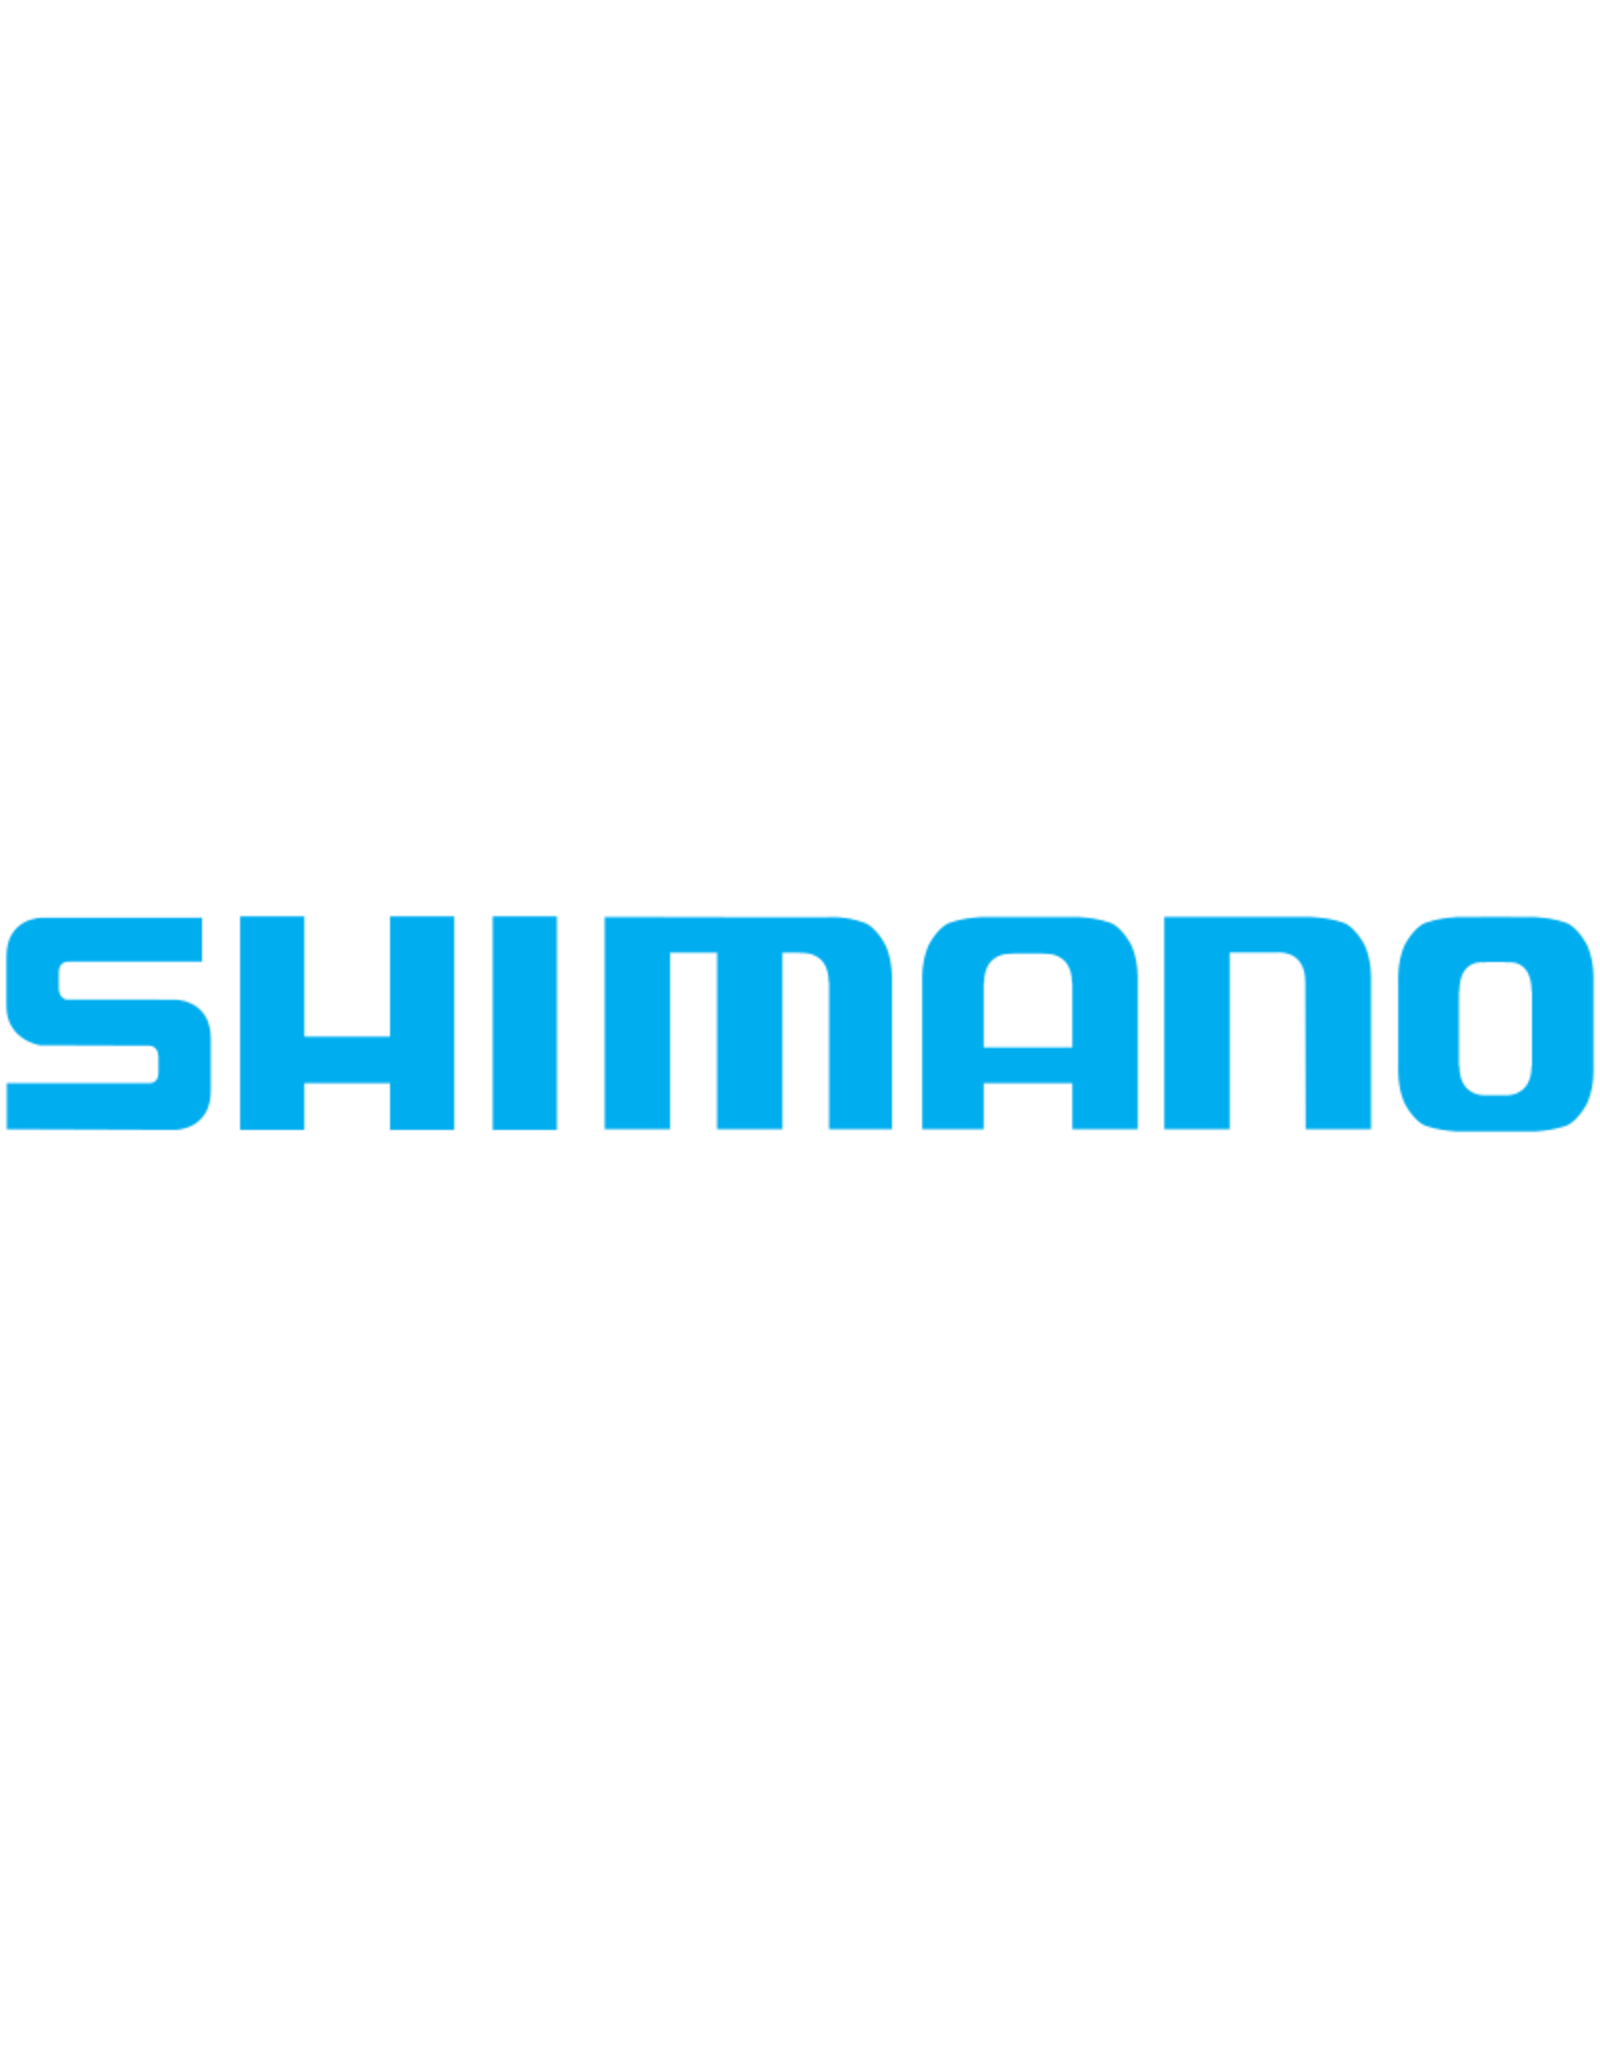 Shimano TGT0566  DRAG WASHER (B)